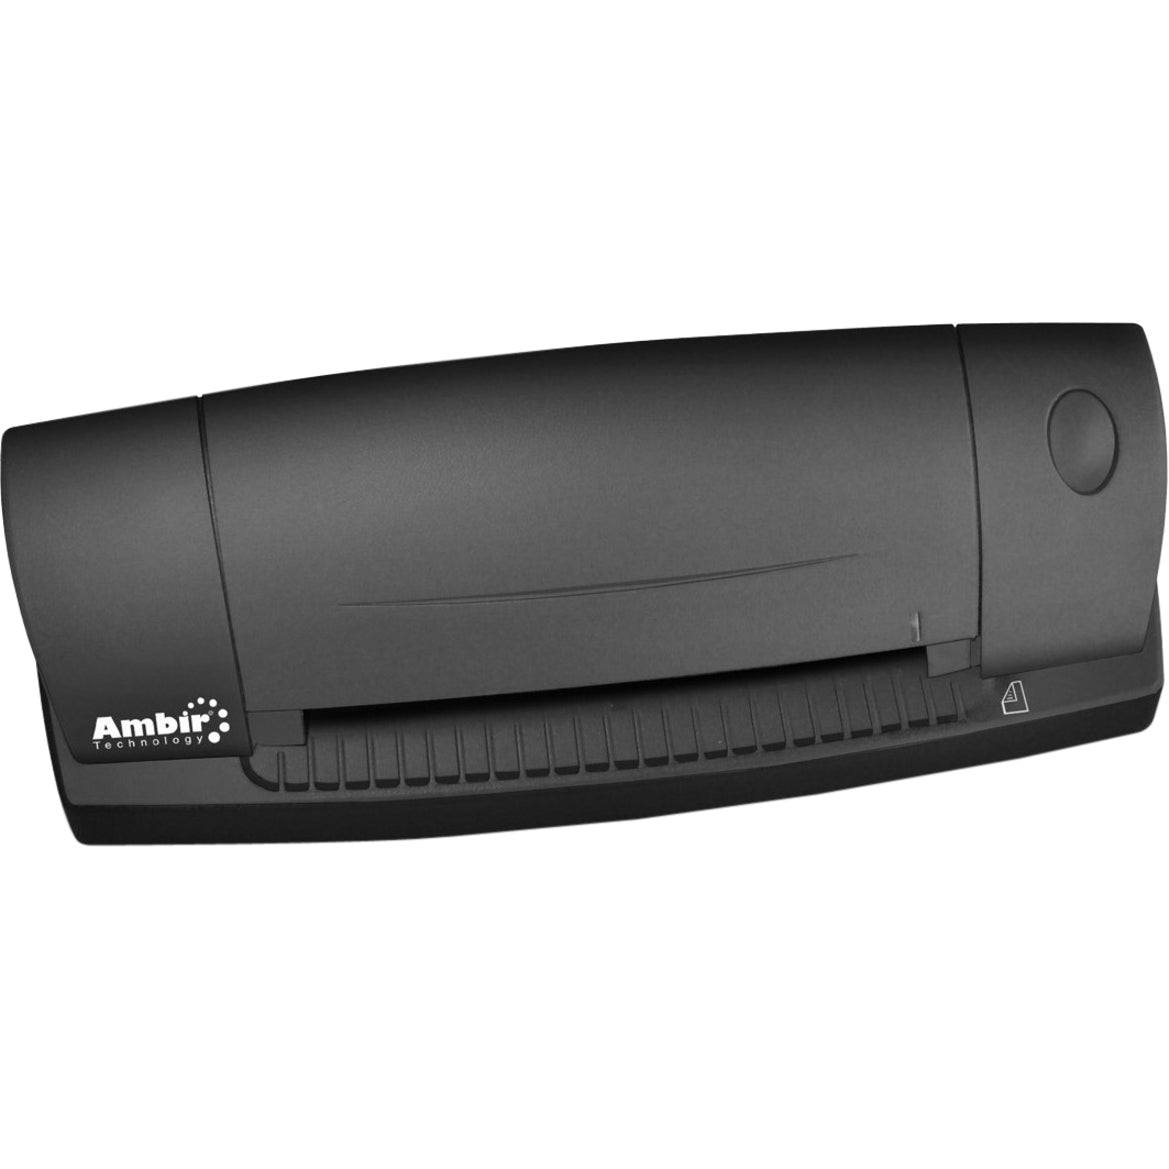 Ambir DS687-PRO Duplex ID Card Scanner w/ AmbirScan Pro, USB 2.0, 2 Year Warranty